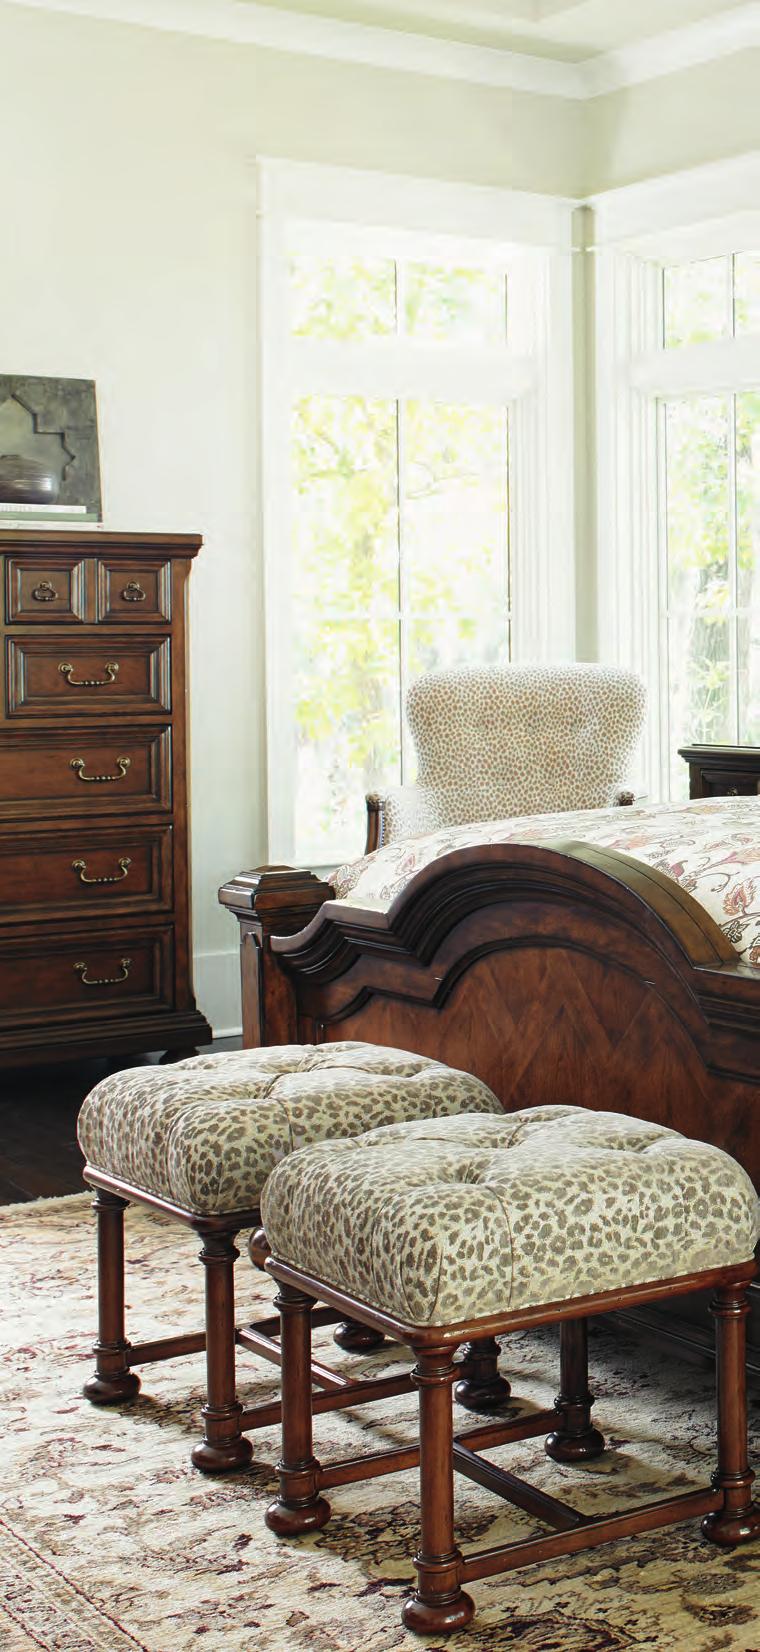 COVENTRY HILLS BEDROOM An interlocking Rustic Cherry veneer pattern highlights the